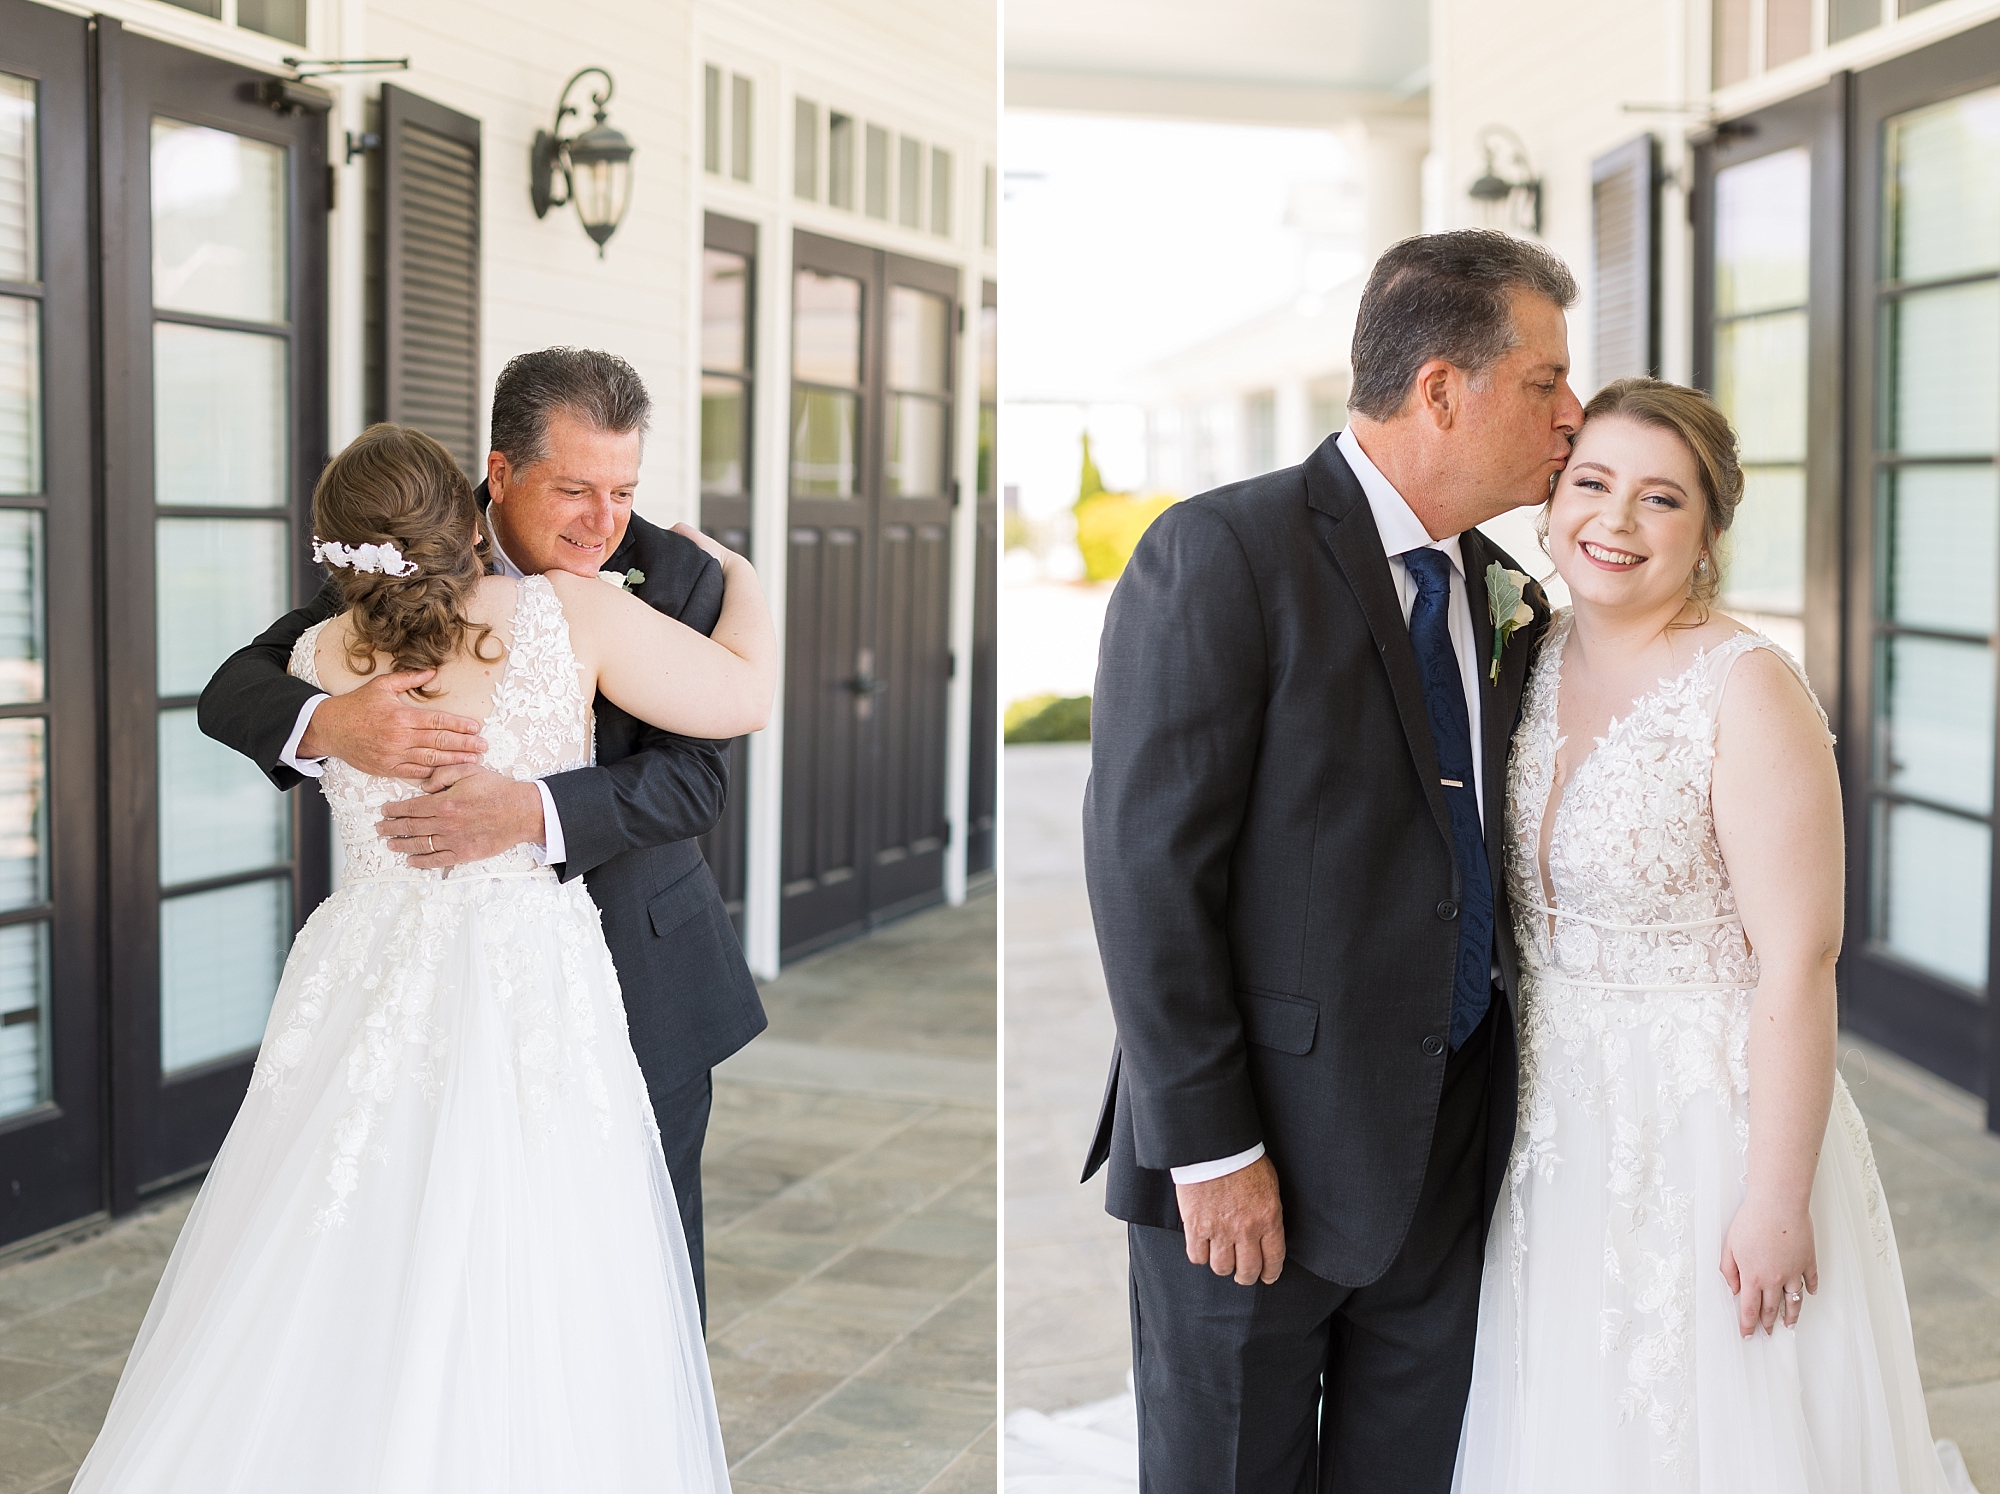 Bride and her dad - Raleigh NC Wedding Photographer - Sarah Hinckley Photography